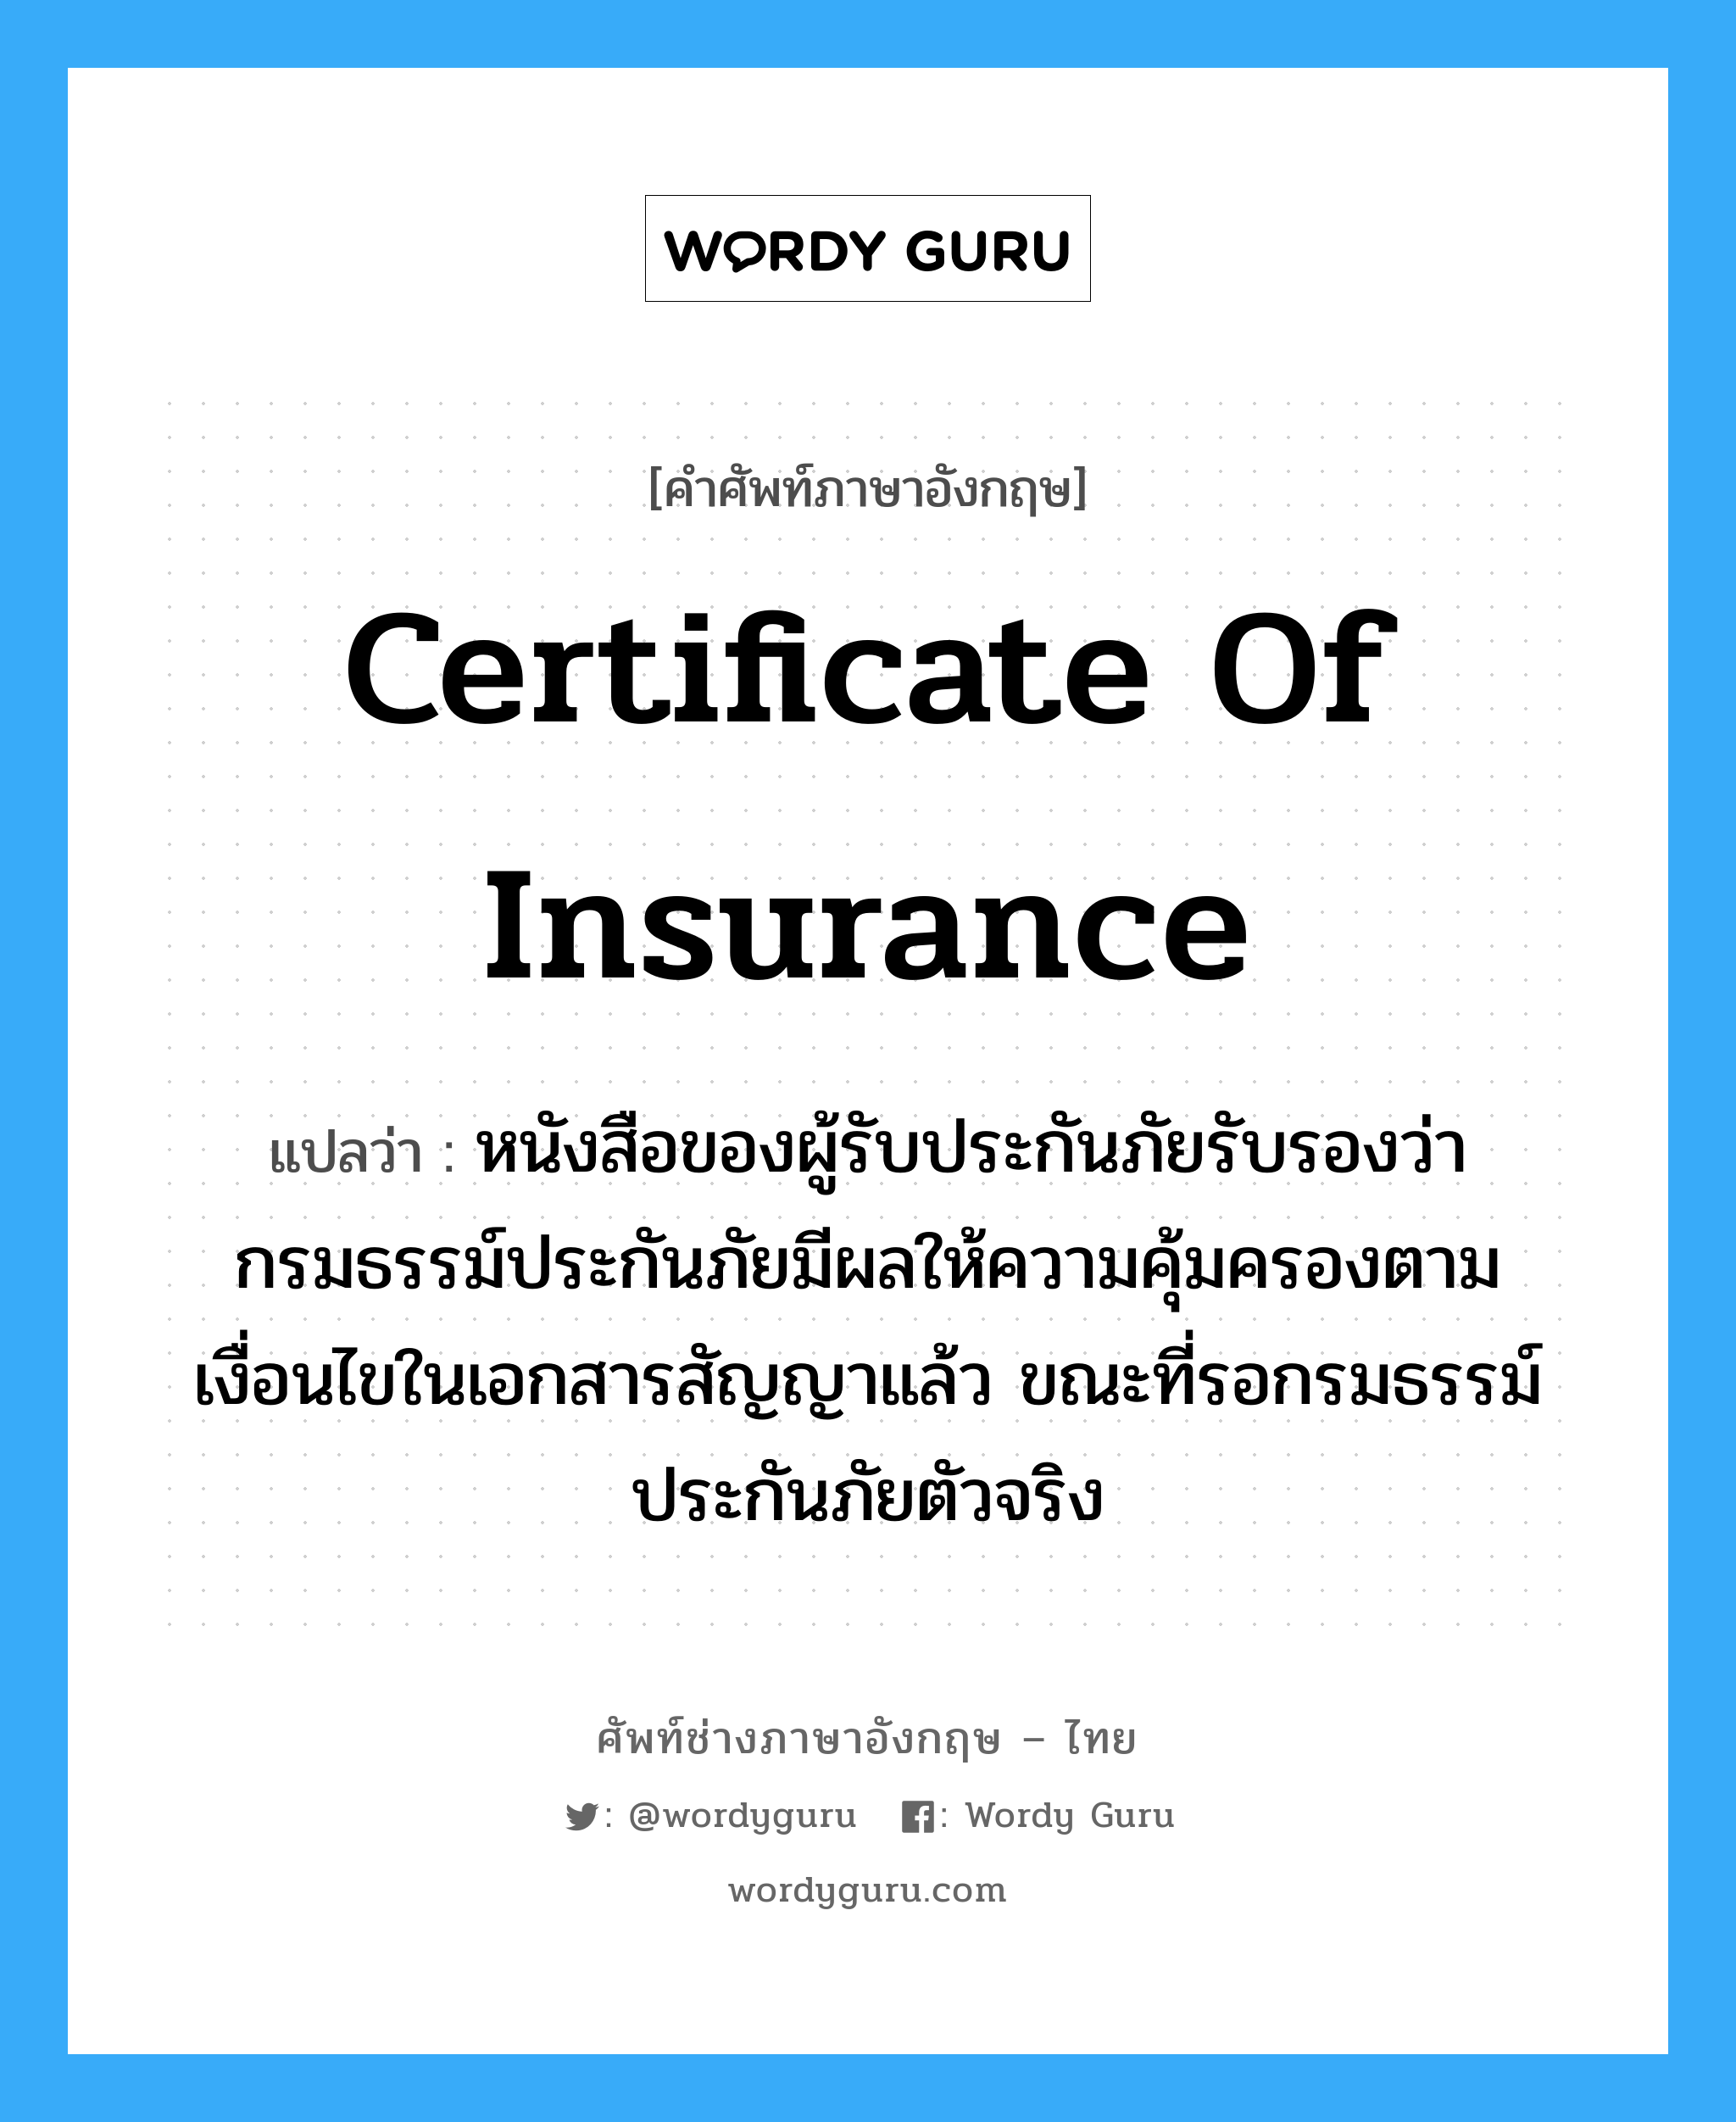 Certificate of Insurance แปลว่า?, คำศัพท์ช่างภาษาอังกฤษ - ไทย Certificate of Insurance คำศัพท์ภาษาอังกฤษ Certificate of Insurance แปลว่า หนังสือของผู้รับประกันภัยรับรองว่ากรมธรรม์ประกันภัยมีผลให้ความคุ้มครองตามเงื่อนไขในเอกสารสัญญาแล้ว ขณะที่รอกรมธรรม์ประกันภัยตัวจริง